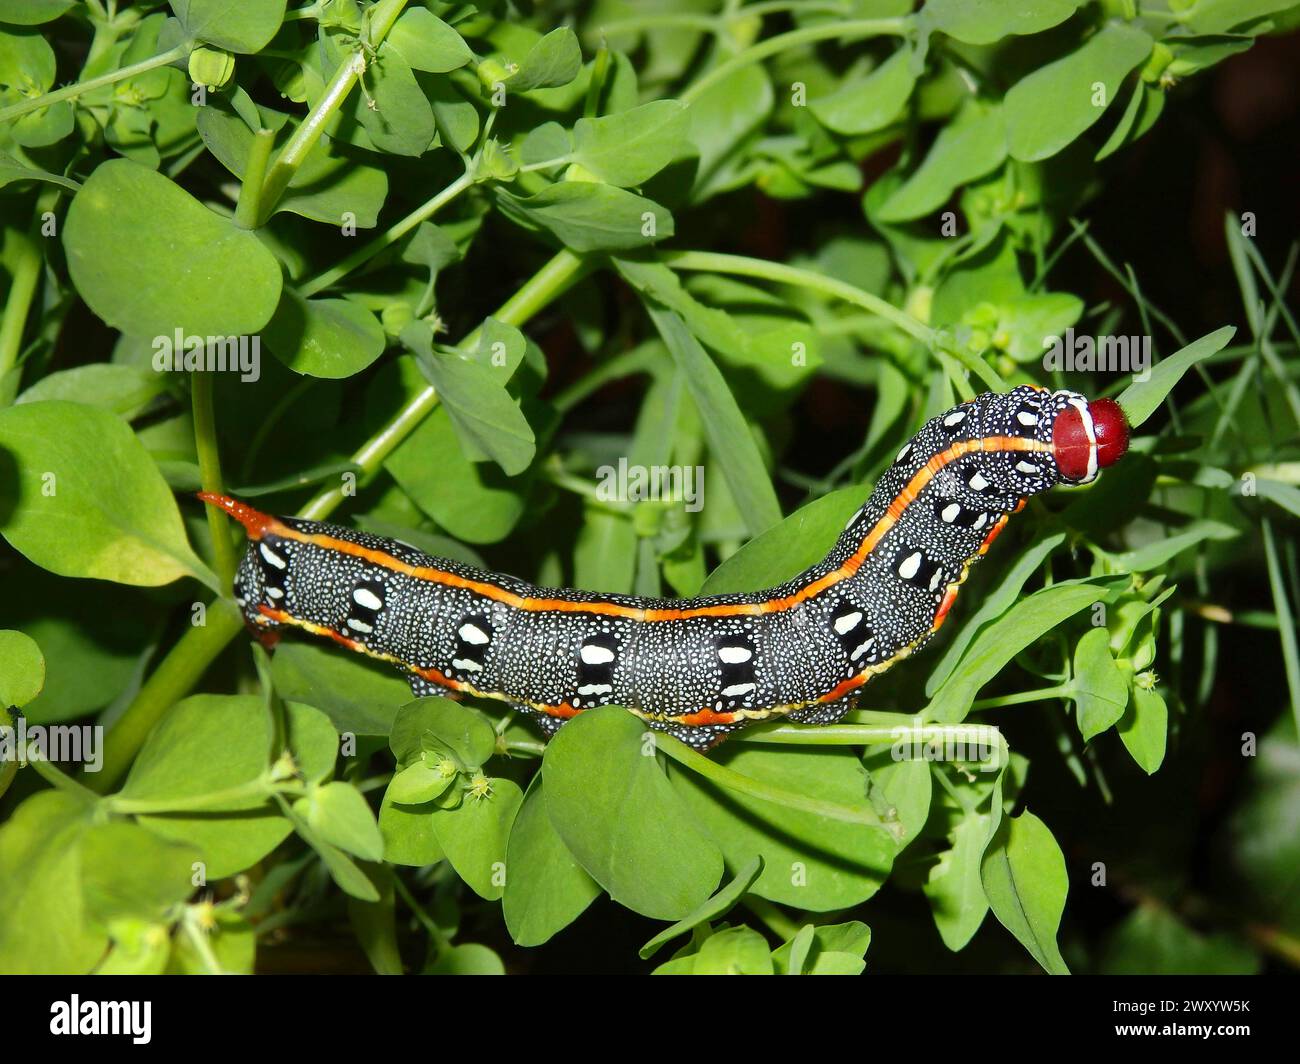 Smoky Spurge Hawk-Moth (Hyles dahlii), Raupe bei Spurge, Falkmoth aus dem Mittelmeerraum Stockfoto